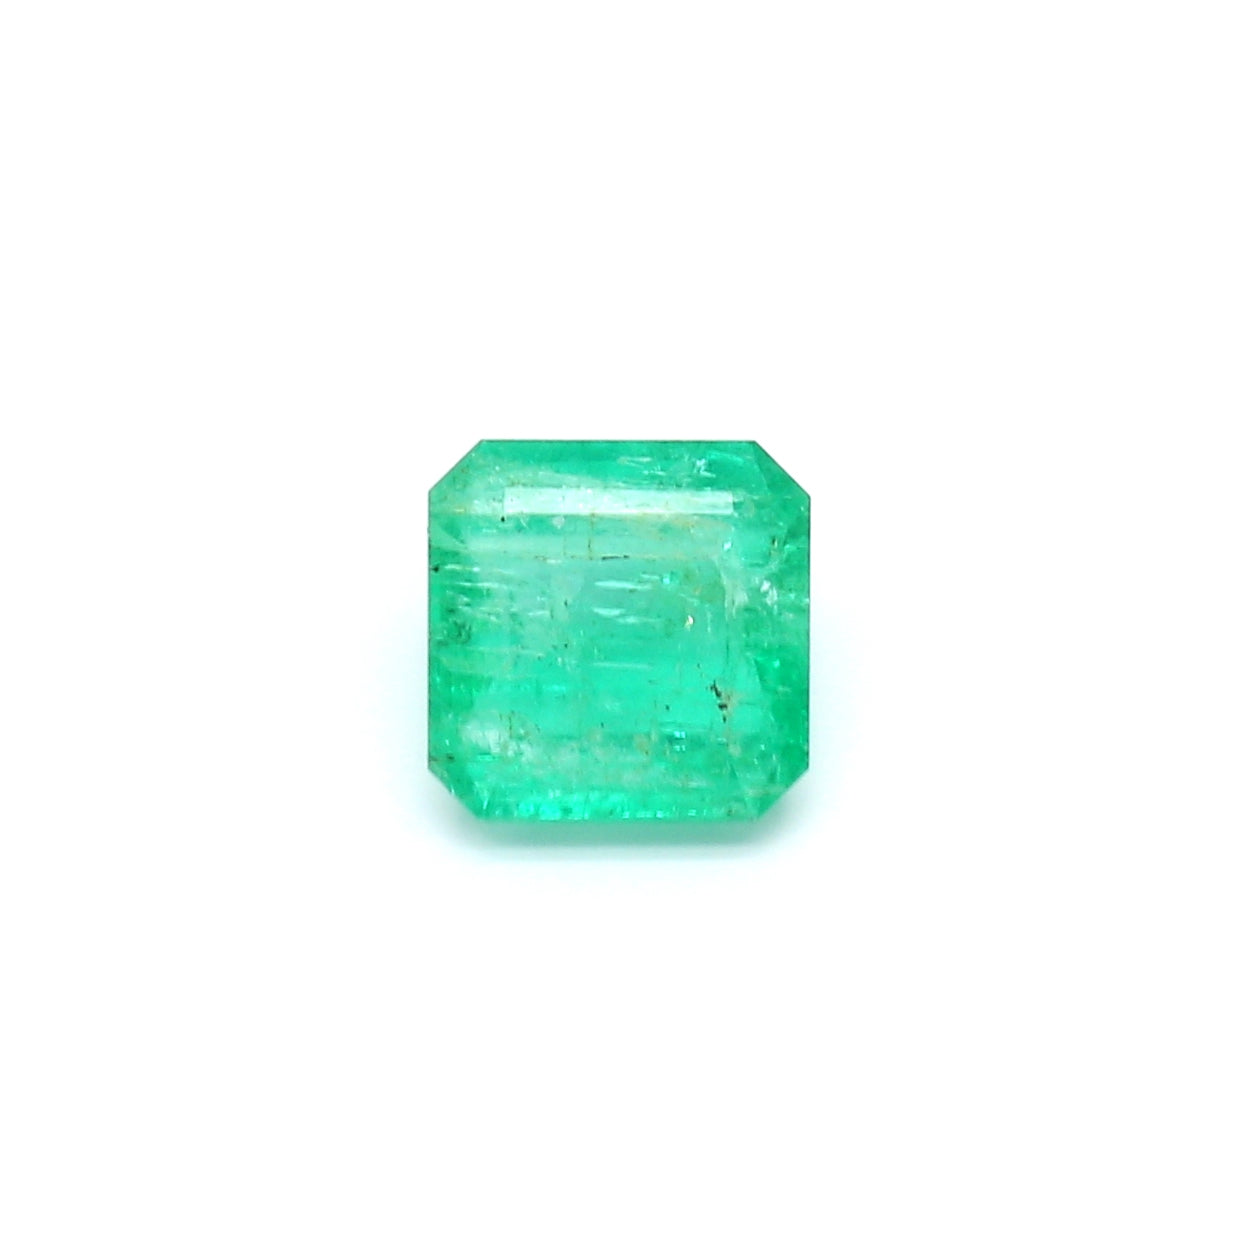 1.25ct Octagon Emerald, Minor Oil, Colombia - 6.63 x 6.62 x 3.67mm